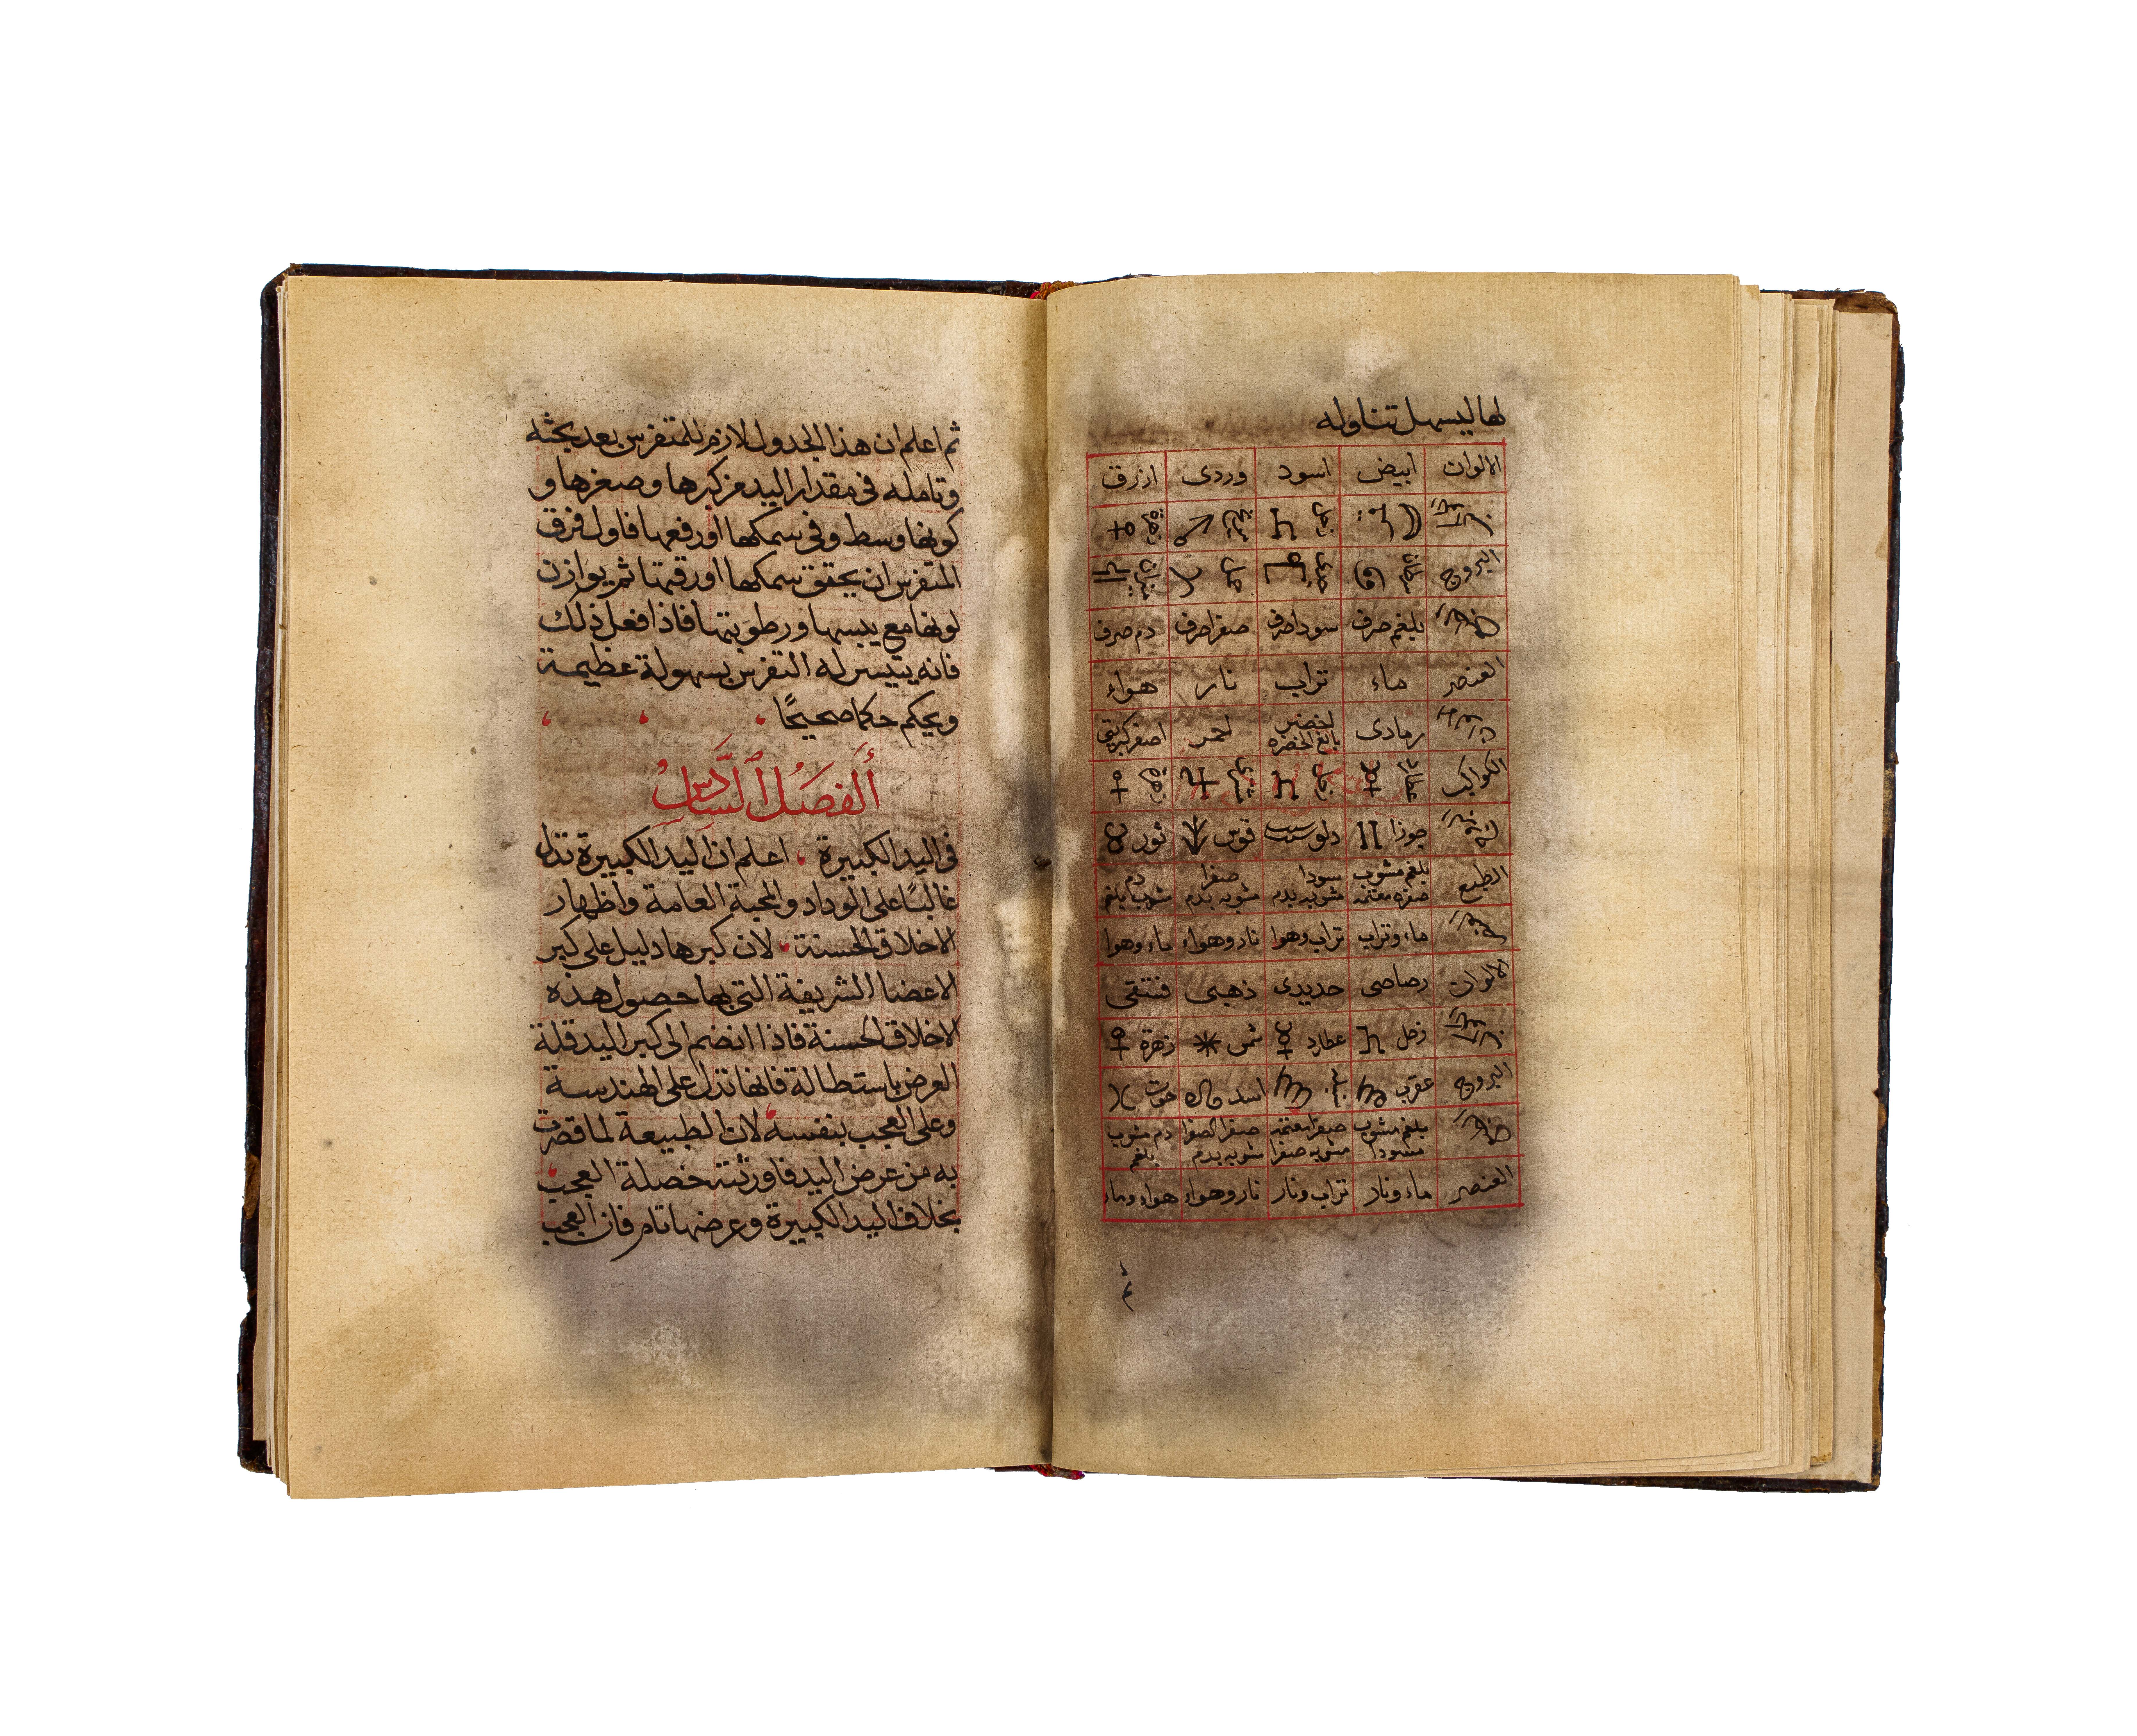 TUHFAT ALALIF FI ELIM QIRA'AT ALKAFI (BOOK OF HIDDEN SCIENCES) COMPILED BY AL-HAKIM AHMAD IBN ALI IB - Image 6 of 9